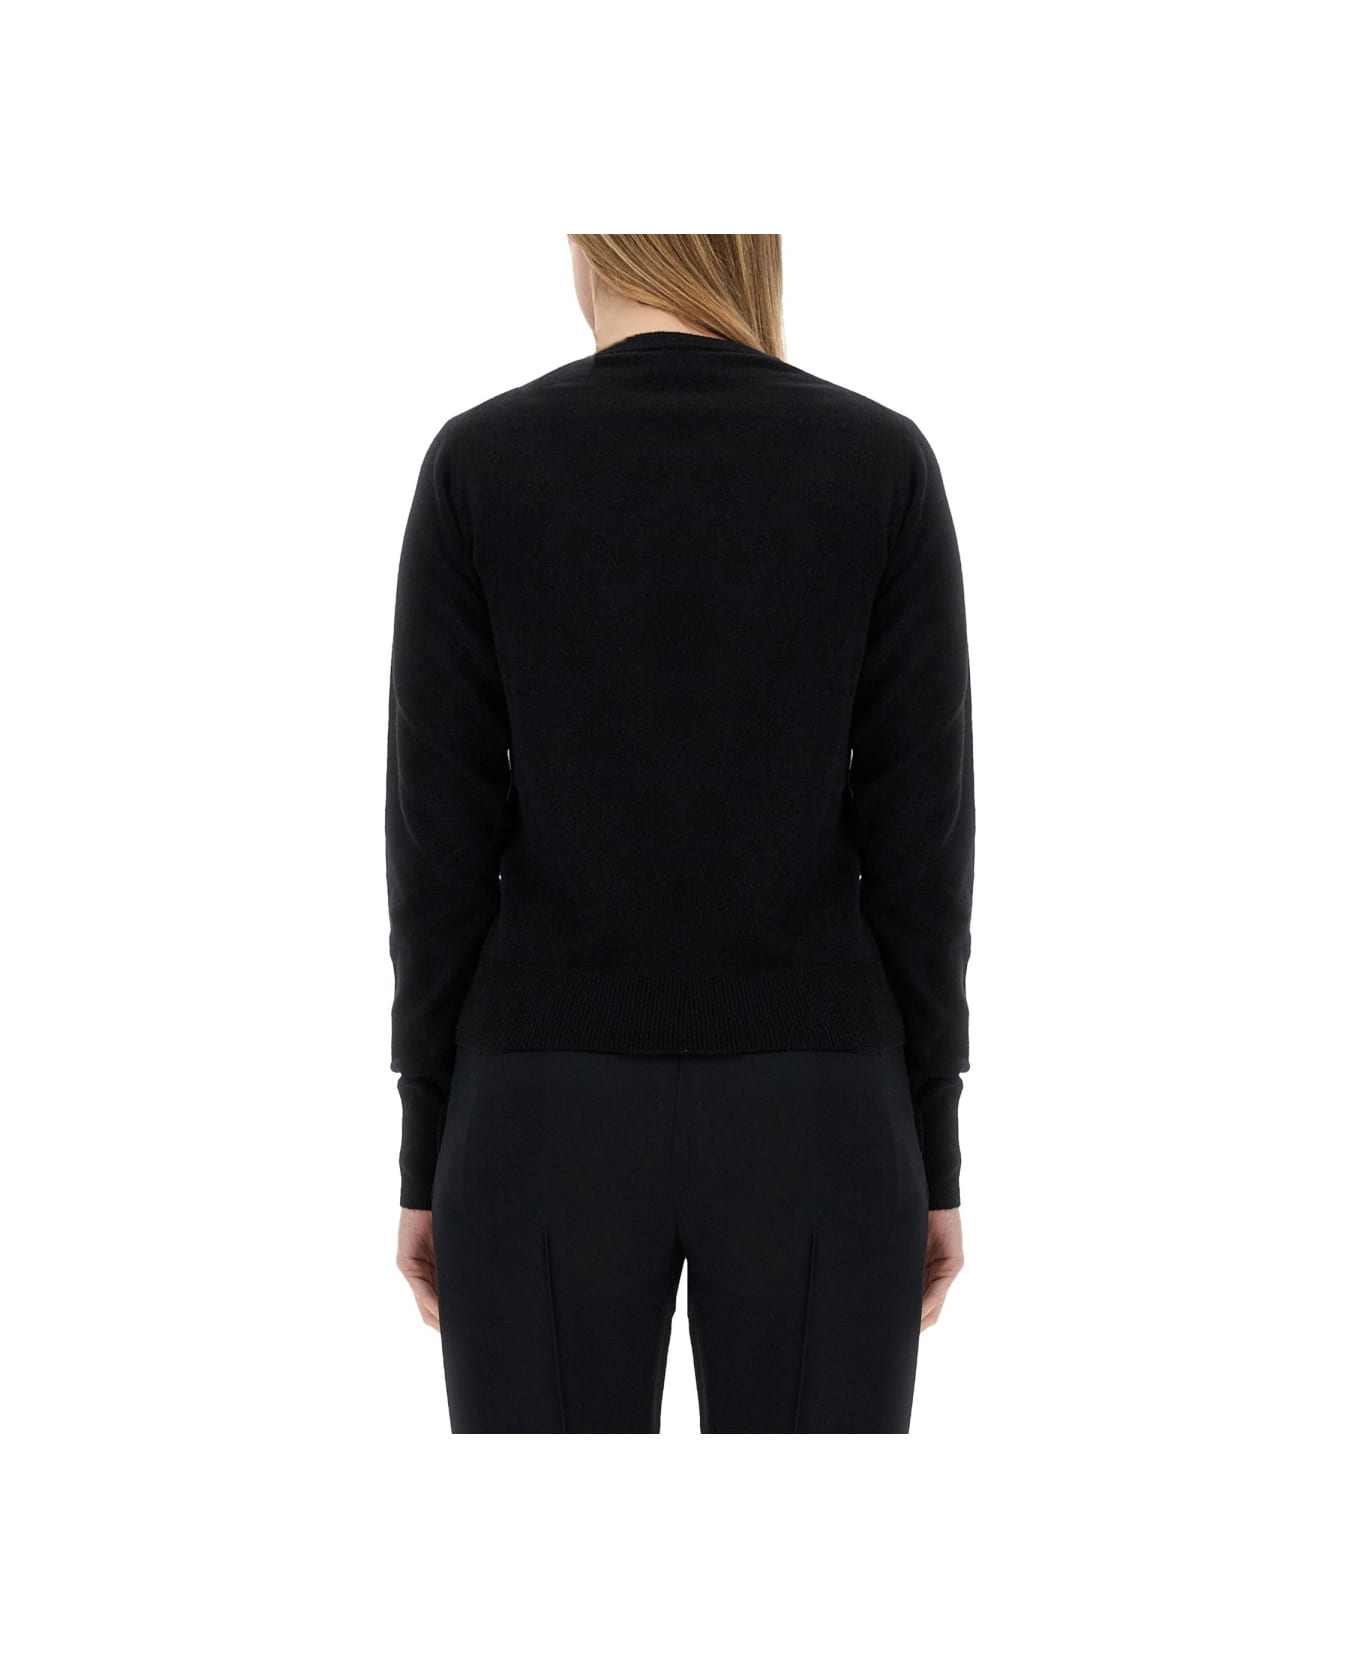 Vivienne Westwood "bea" Shirt - BLACK